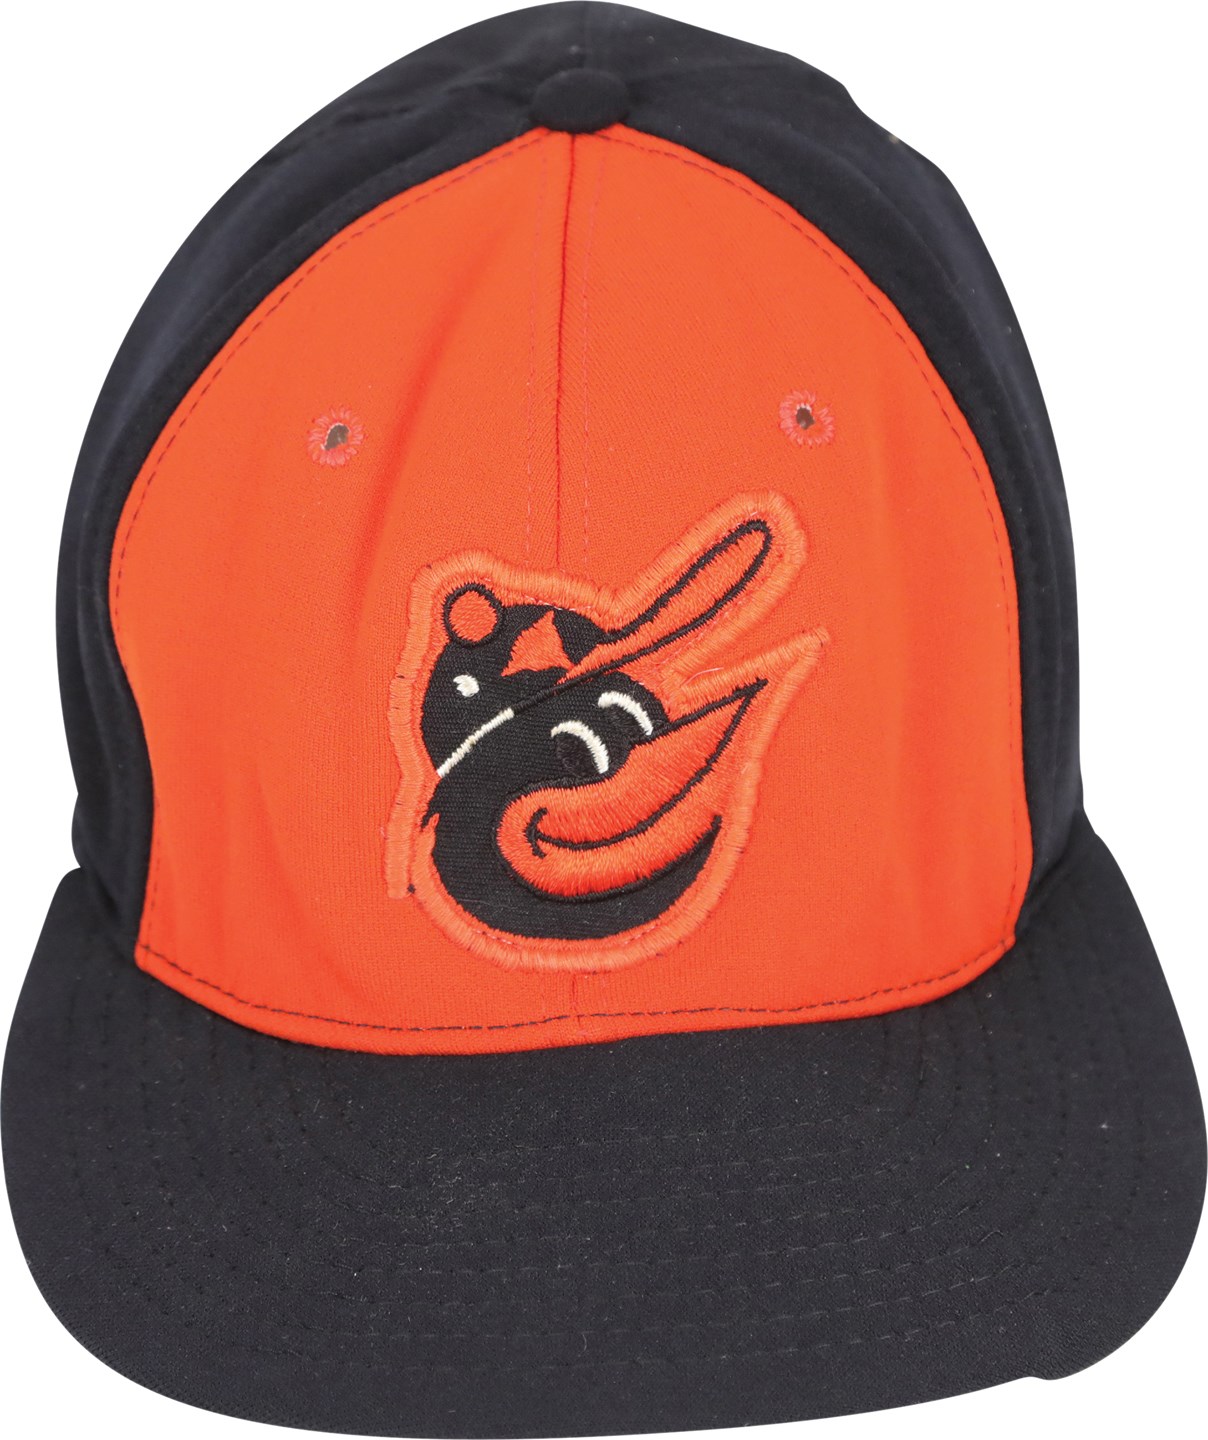 Baseball Equipment - 1976 Brooks Robinson Baltimore Orioles Game Worn Hat